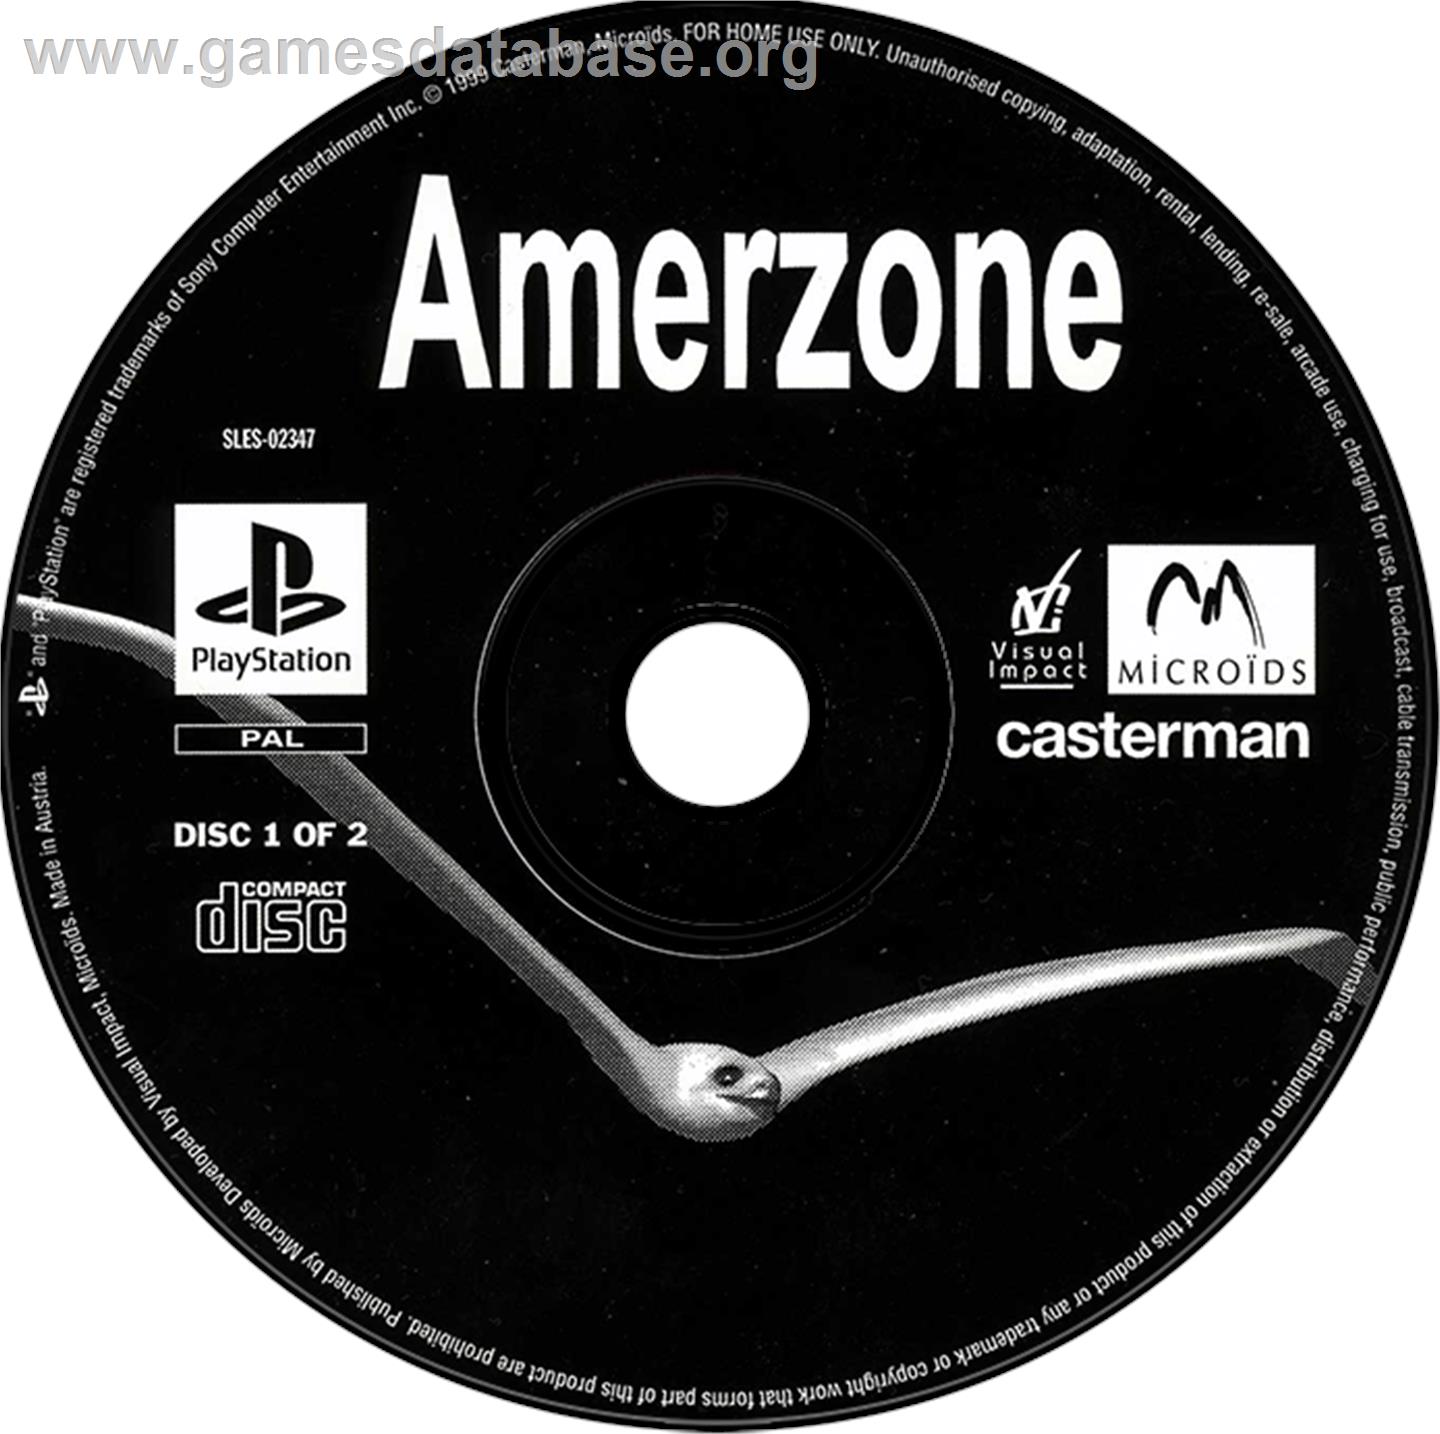 AmerZone: The Explorer's Legacy - Sony Playstation - Artwork - Disc